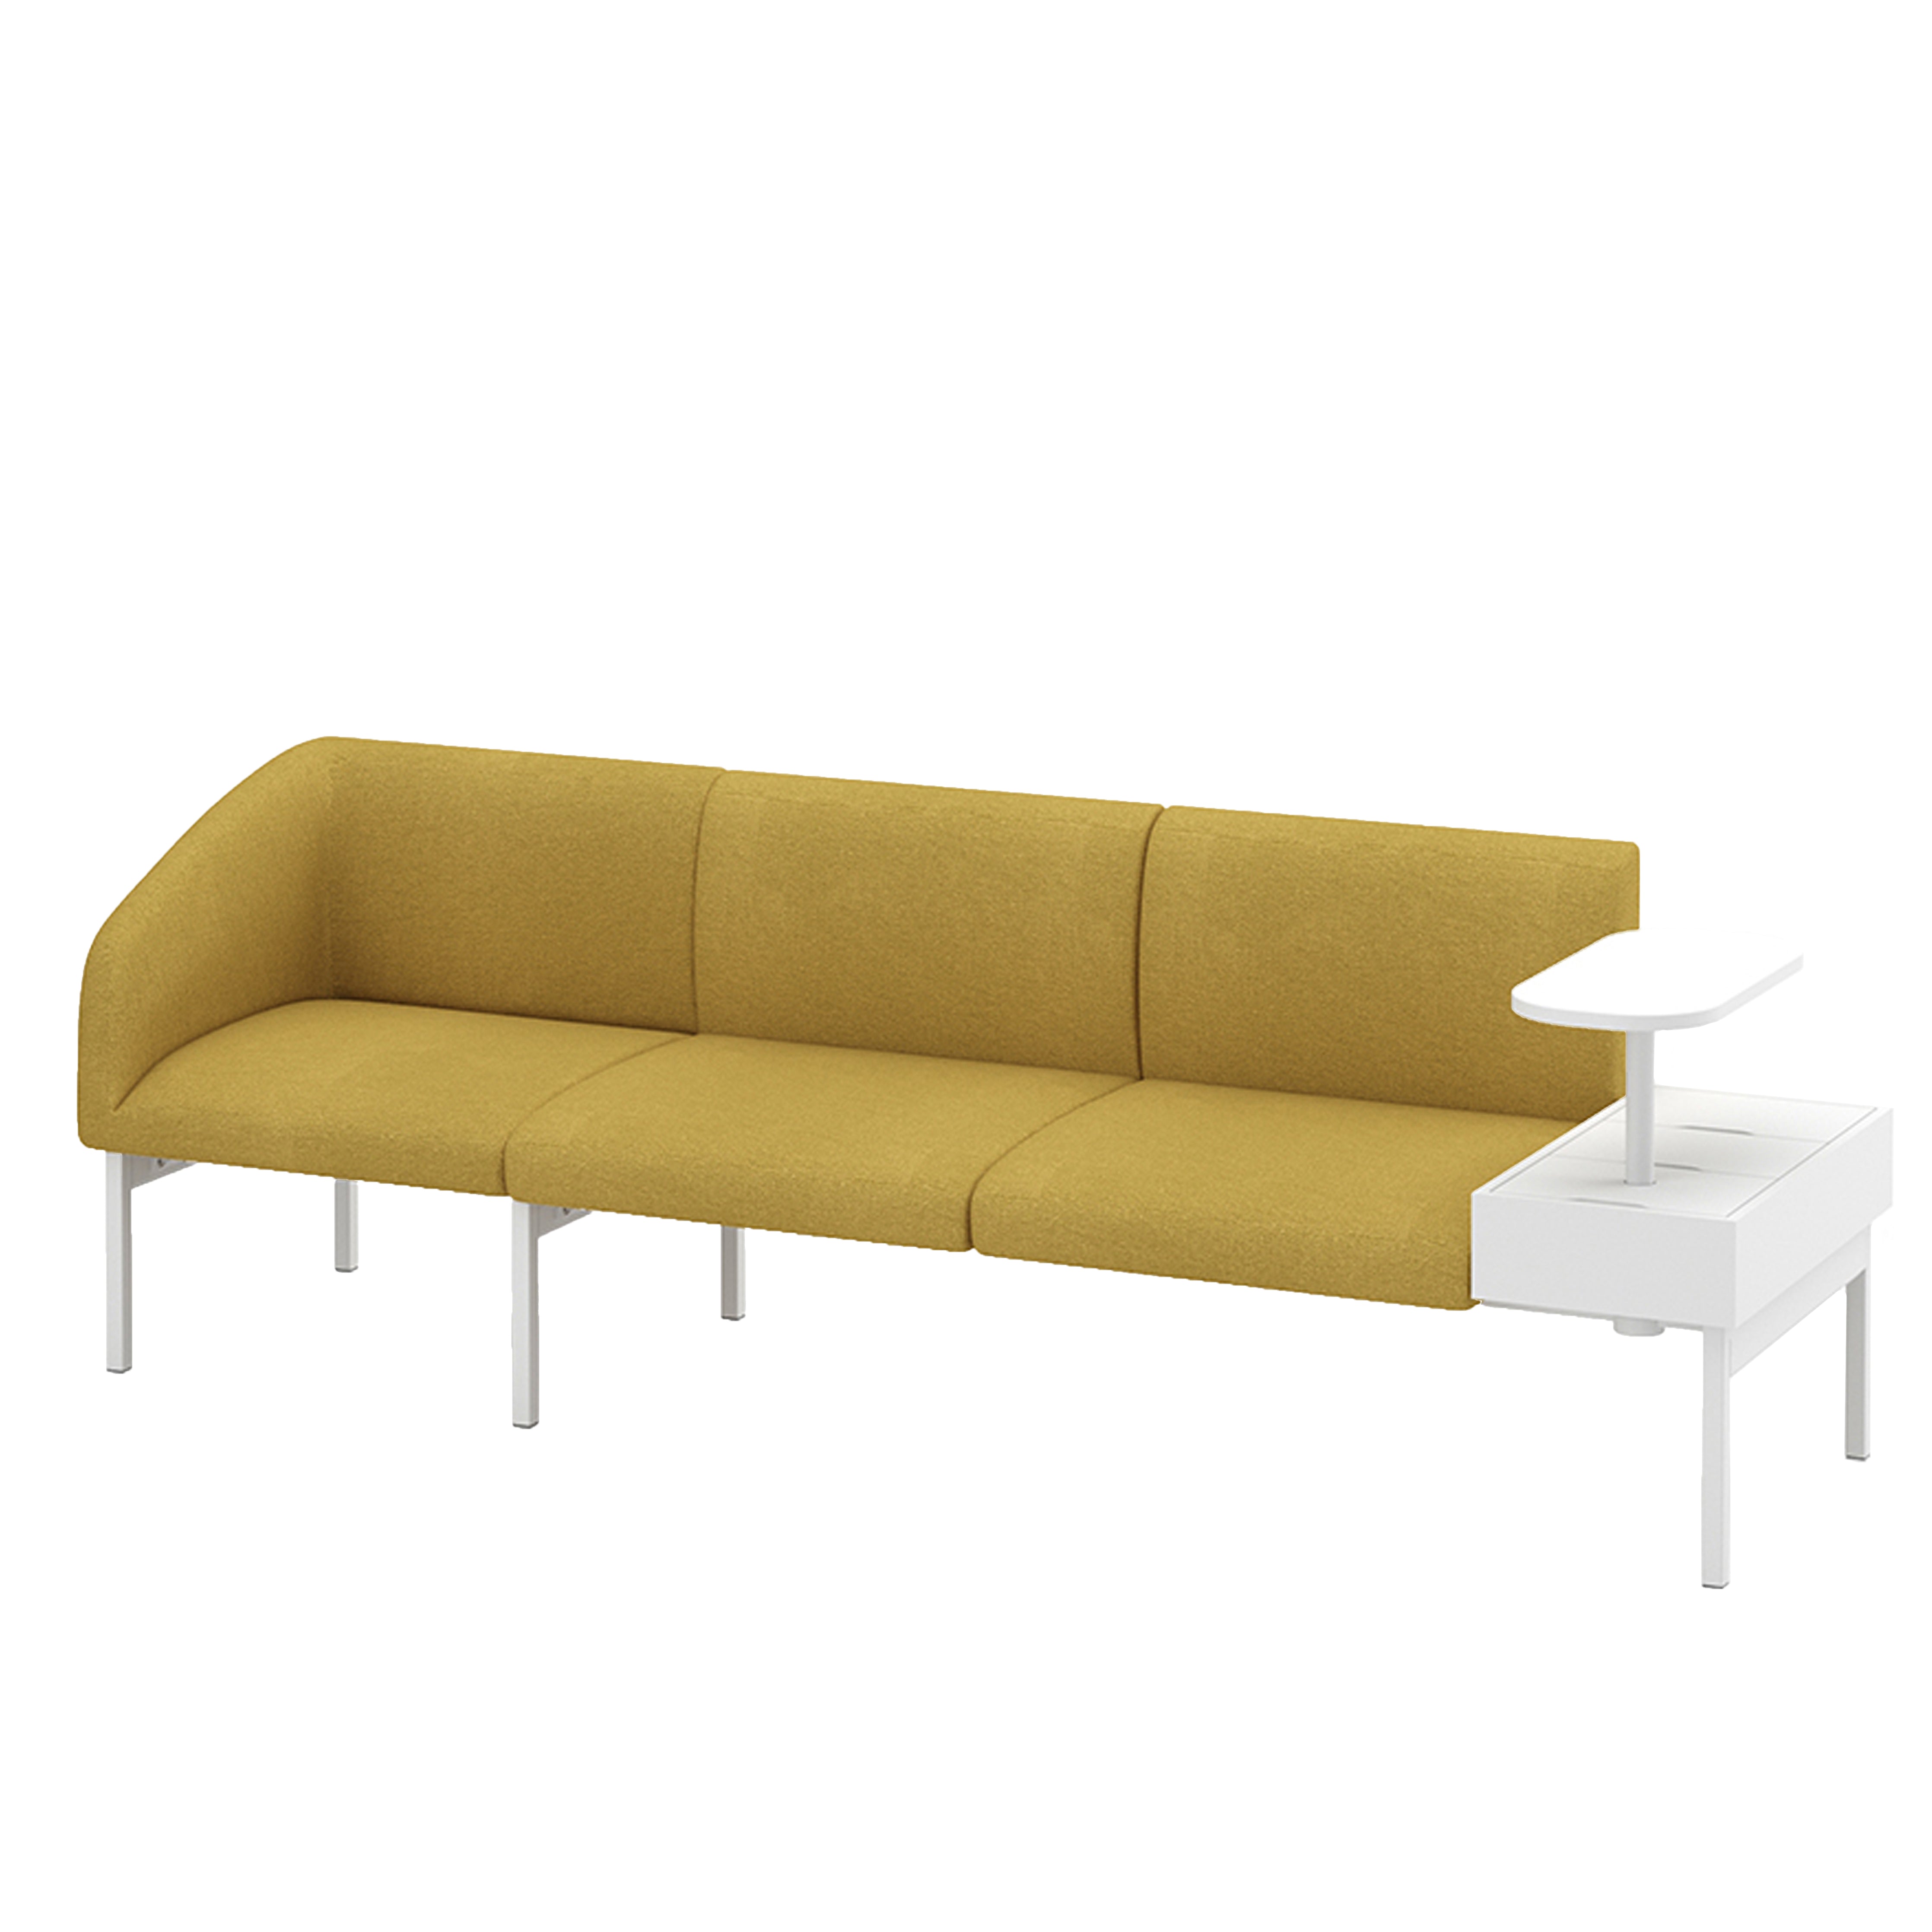 Smile - Modular Sofa